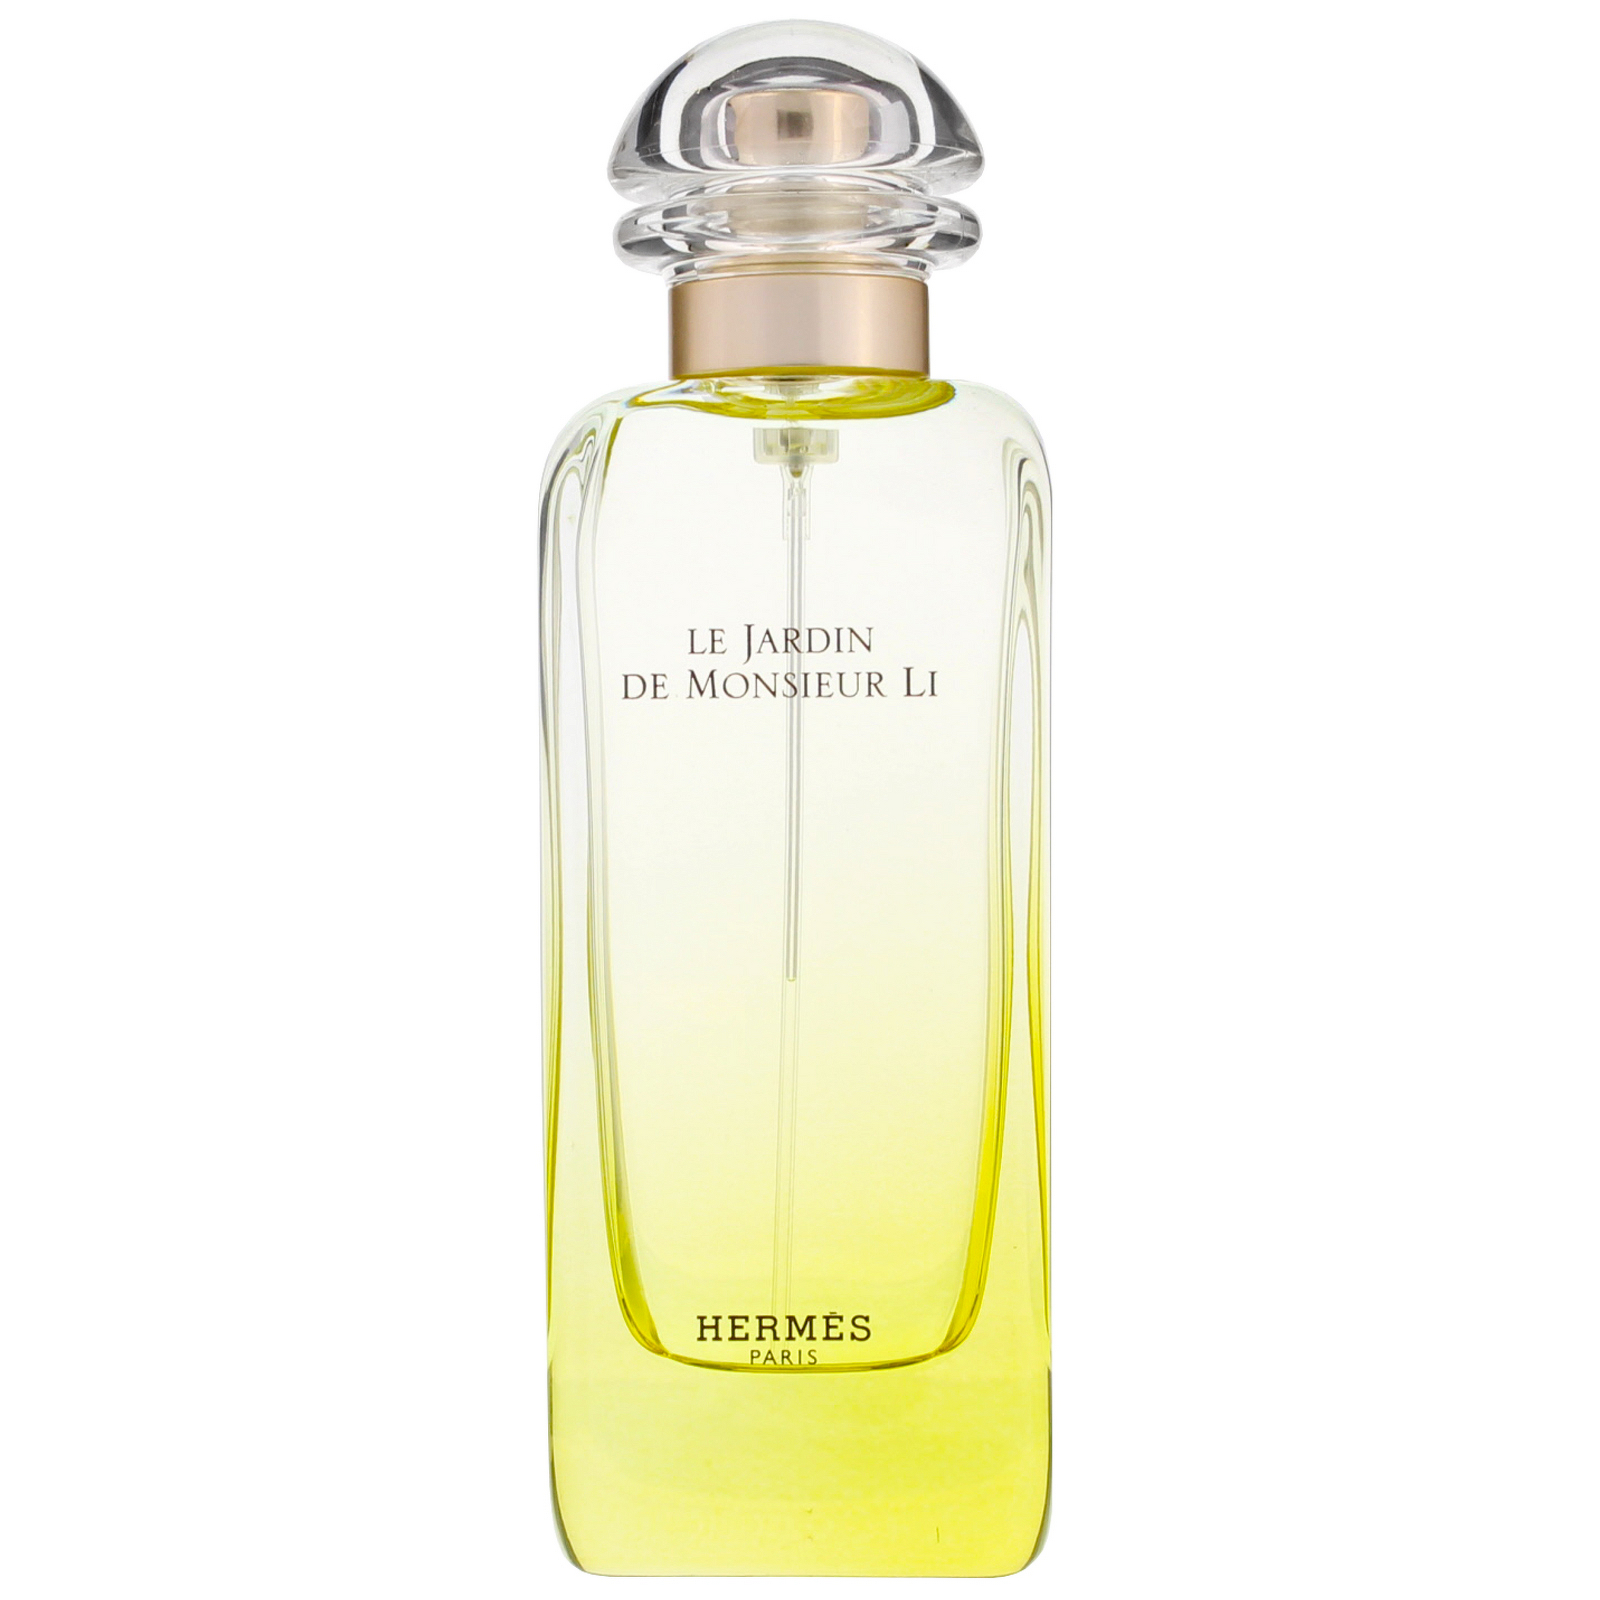 HERMES LE JARDIN DE MONSIEUR LI EDT 100ML - Alinjazperfumes